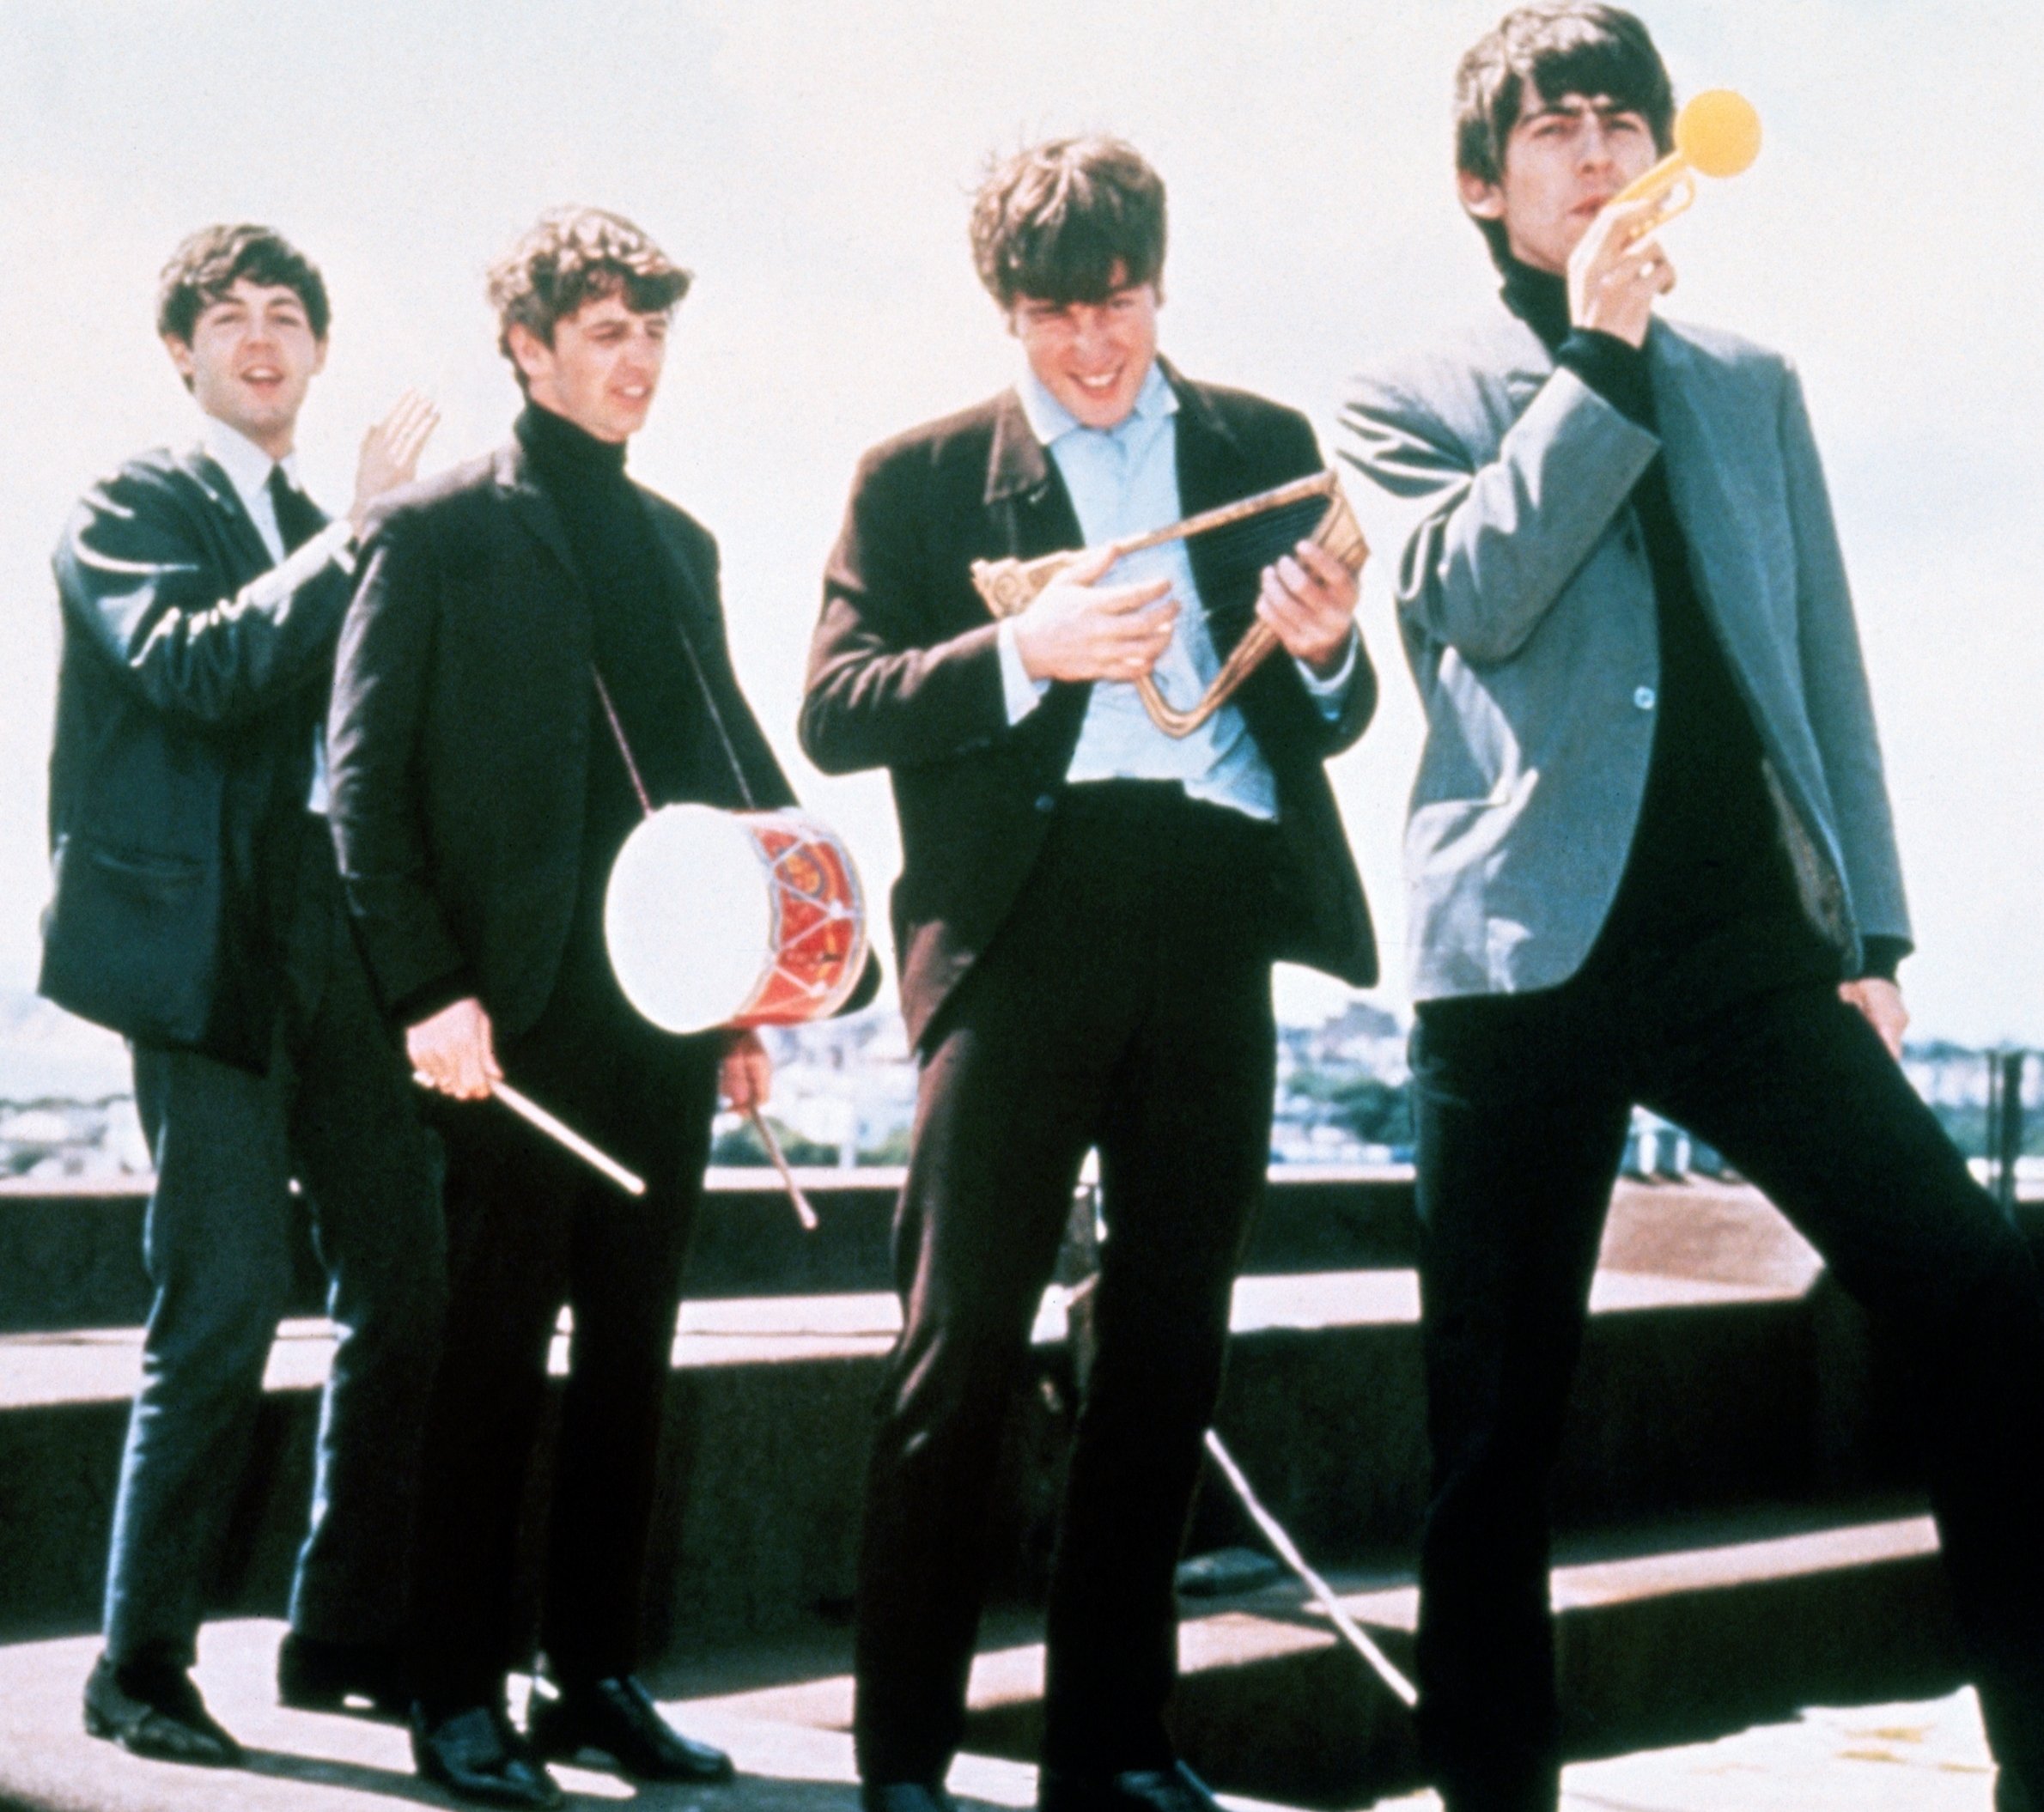 The Beatles' Paul McCartney, Ringo Starr, John Lennon, and George Harrison wearing suits